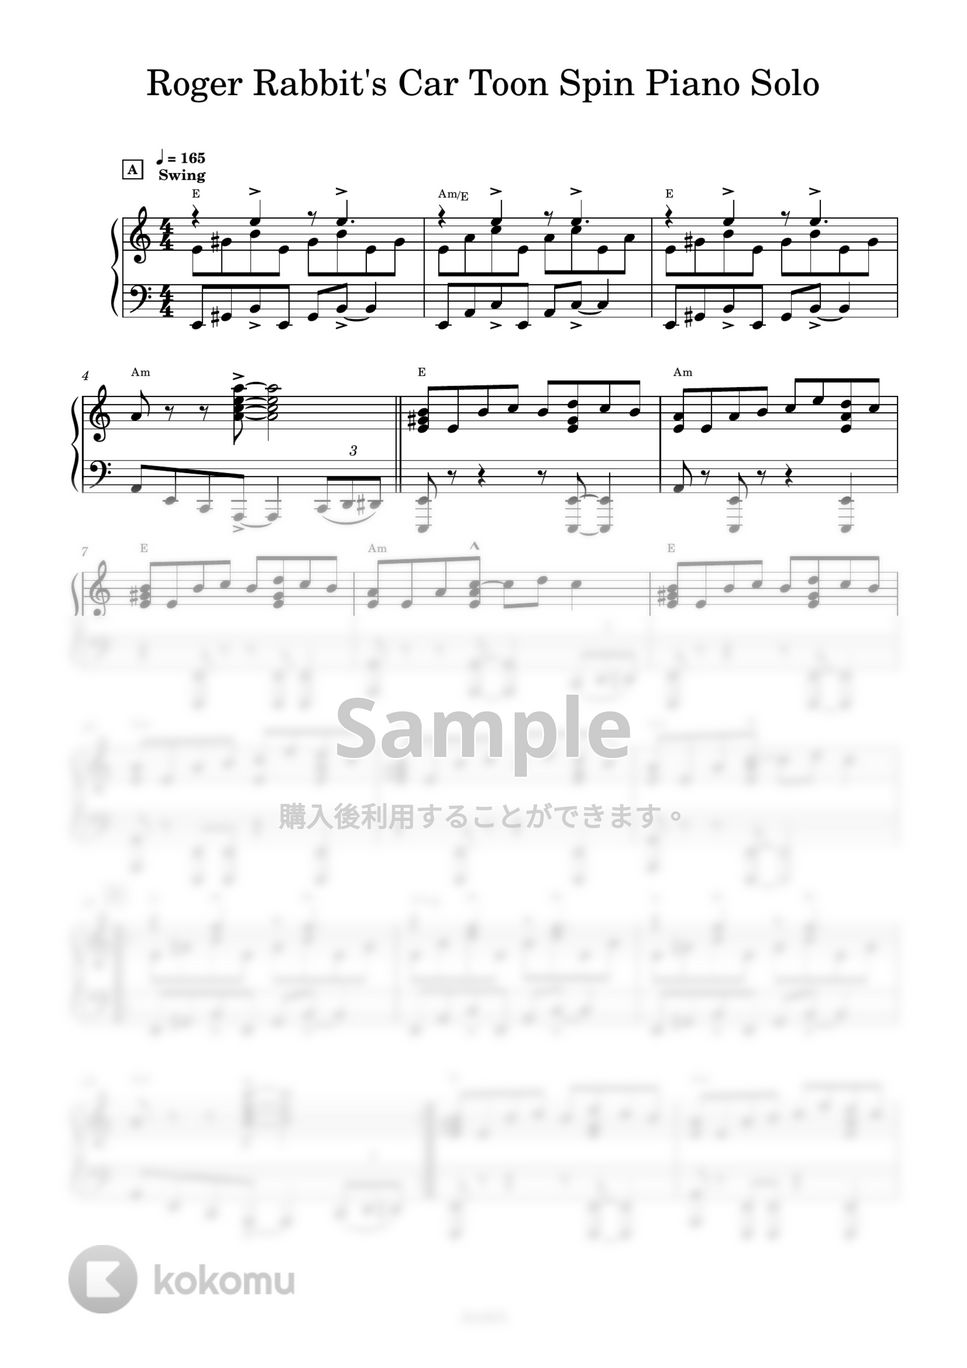 Disney - ロジャーラビットのカートゥーンスピン (カートゥーンスピンピアノ/ロジャーラビットのカートゥーンスピンピアノ) by AsukA818